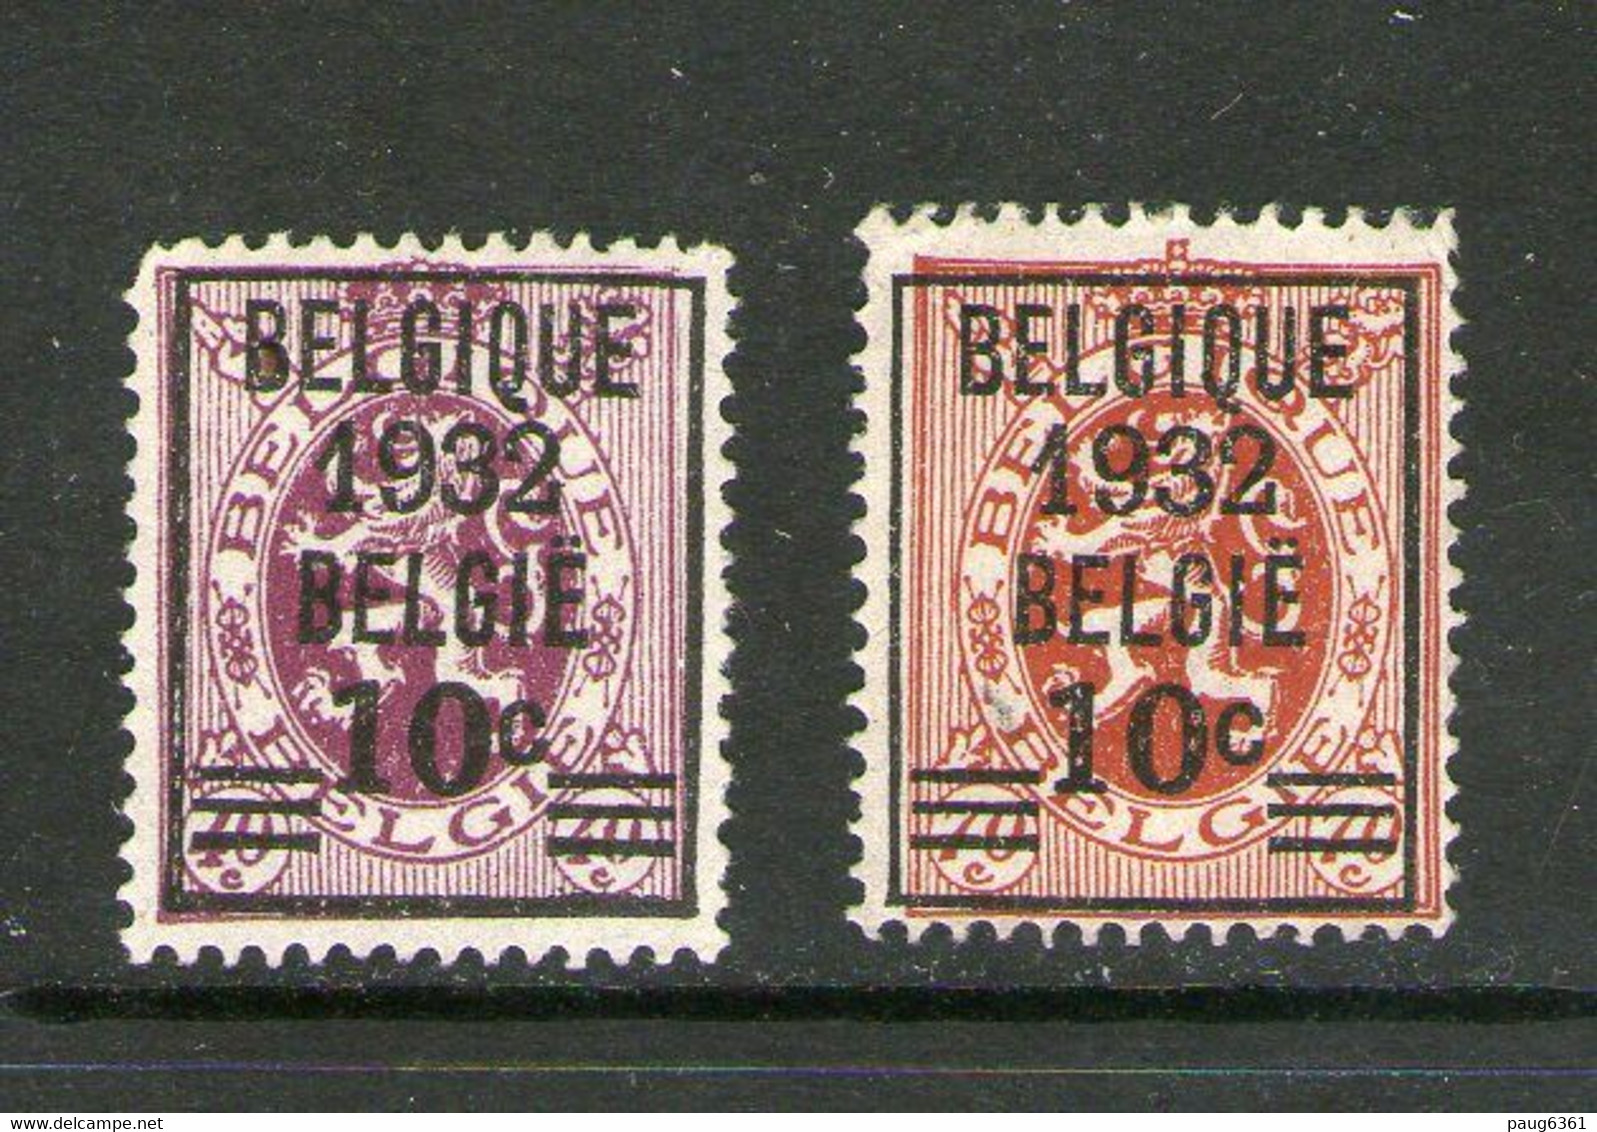 BELGIQUE 1932 YVERT N°333/34 NEUF MH* - Typos 1929-37 (Lion Héraldique)